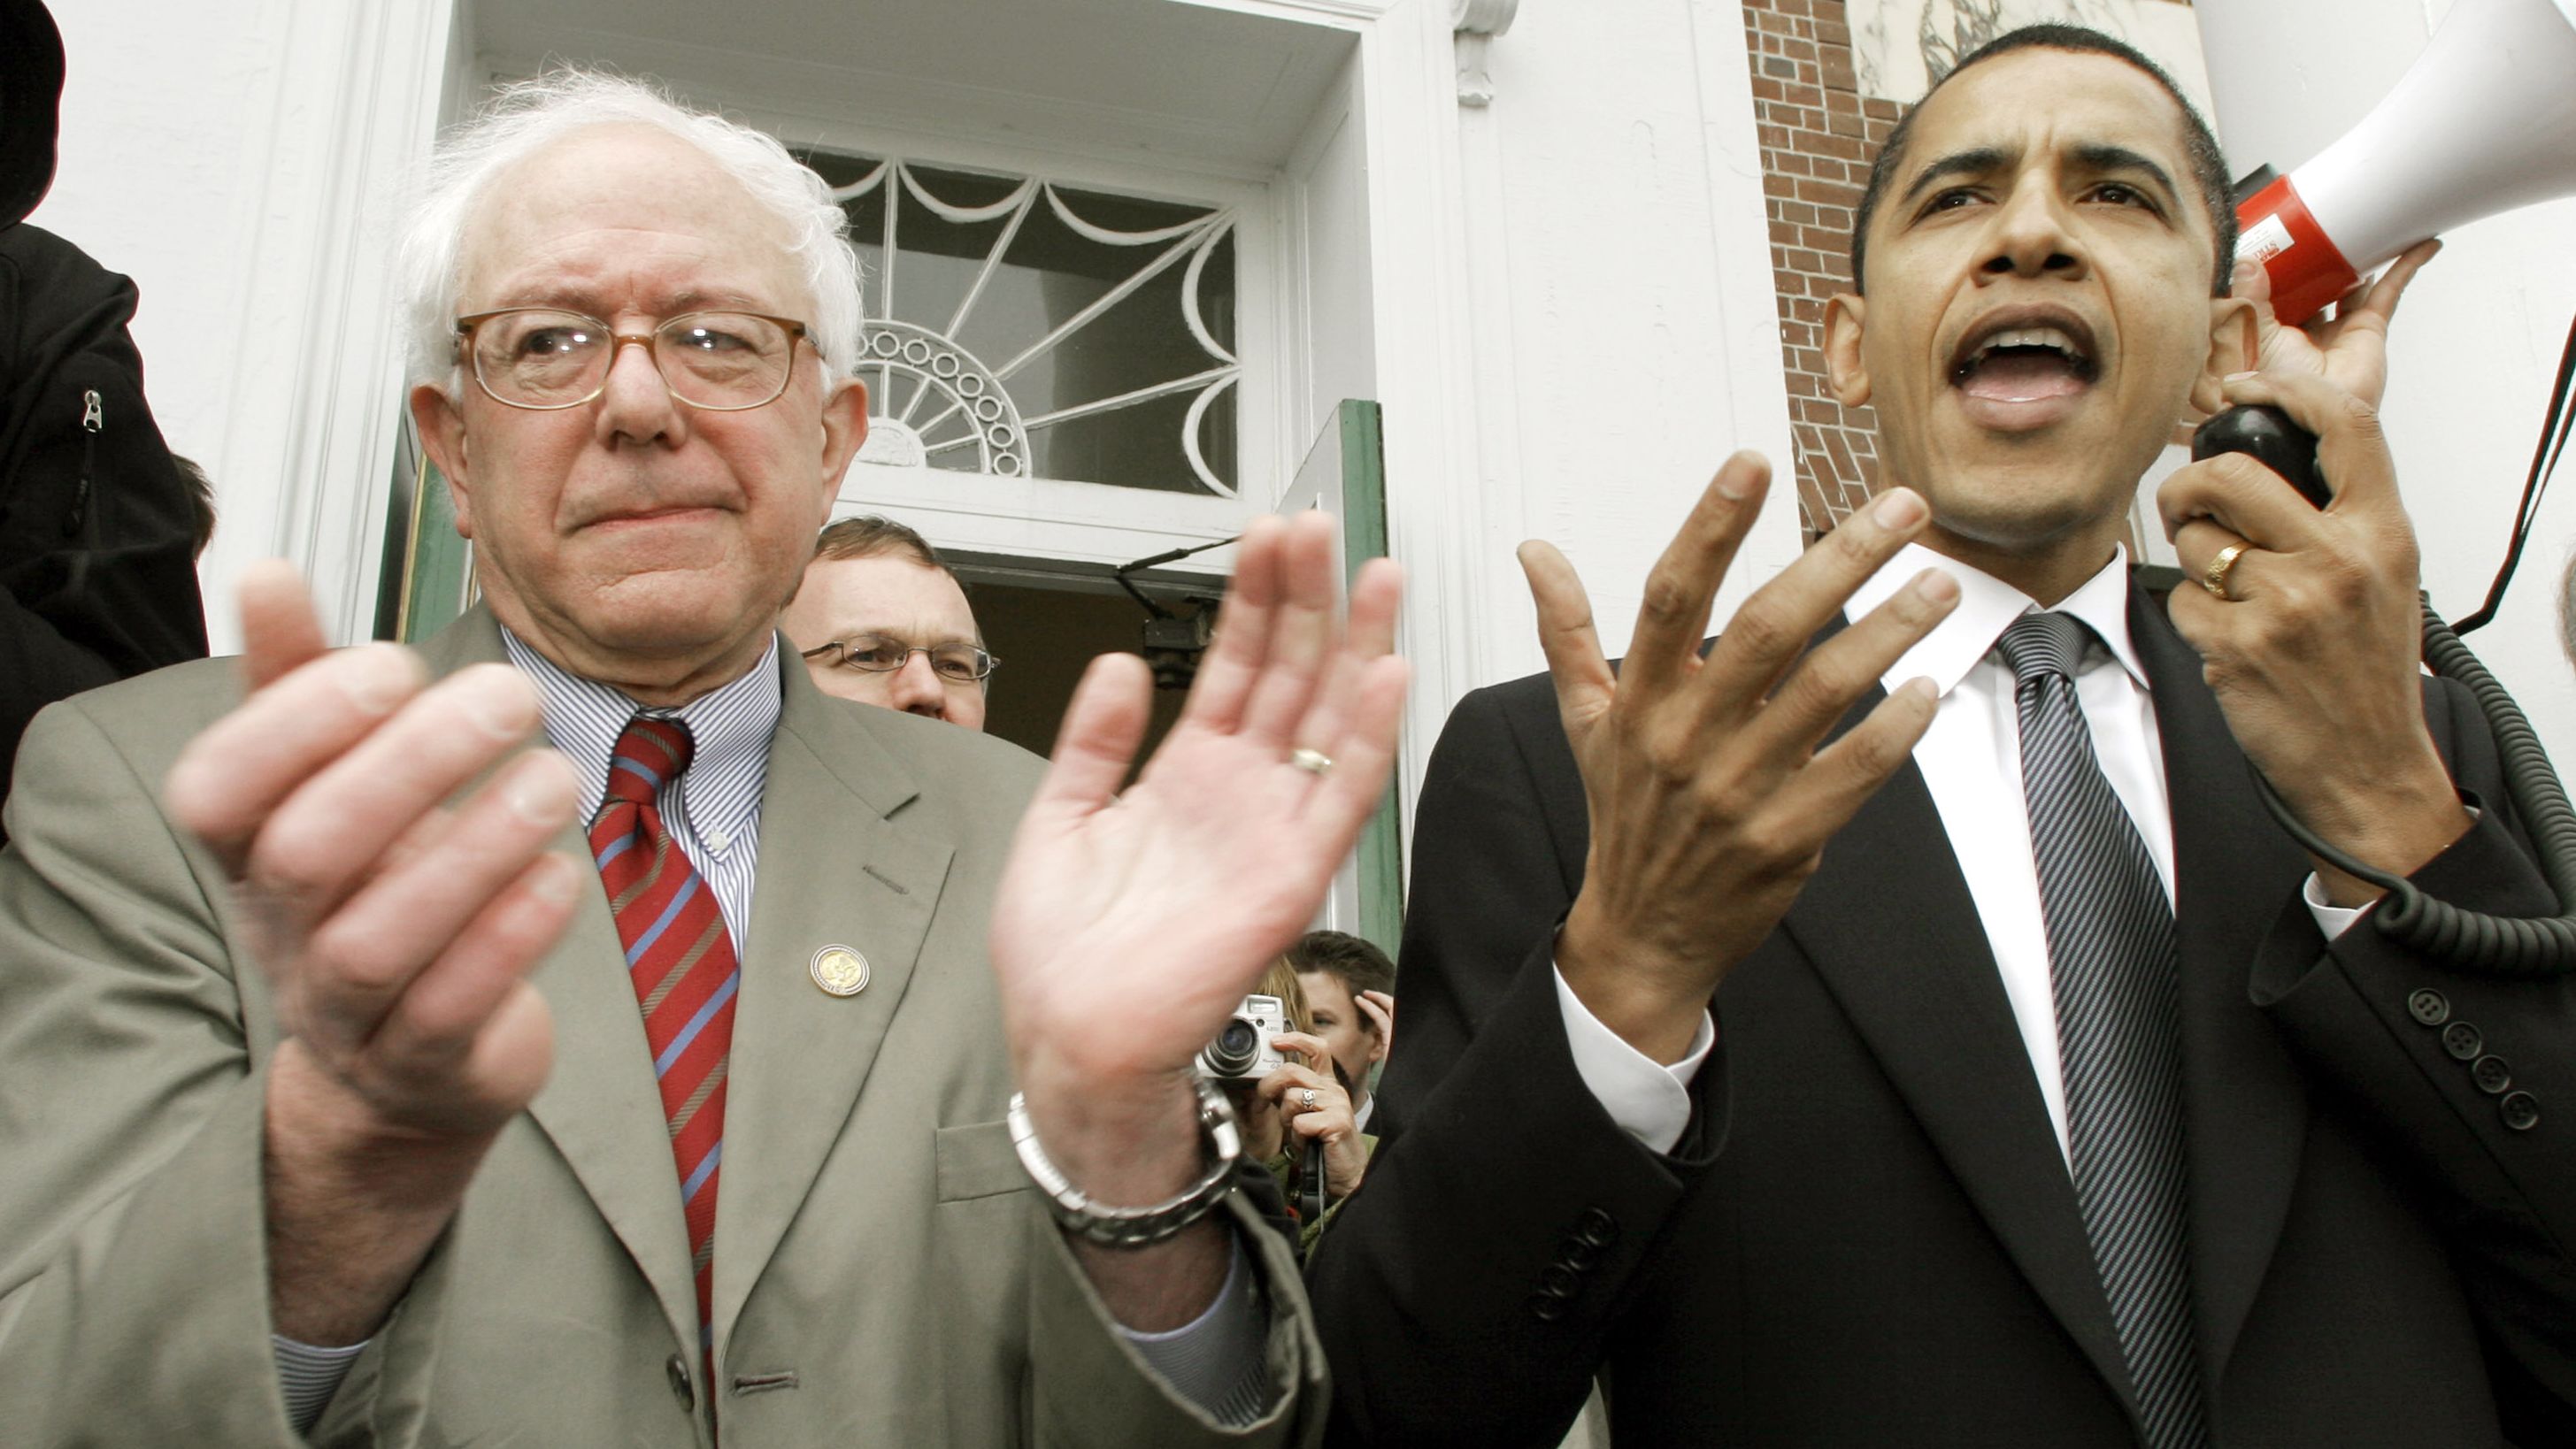 Barack Obama, then a US senator, endorses Sanders' Senate bid at a rally in Burlington in 2006.